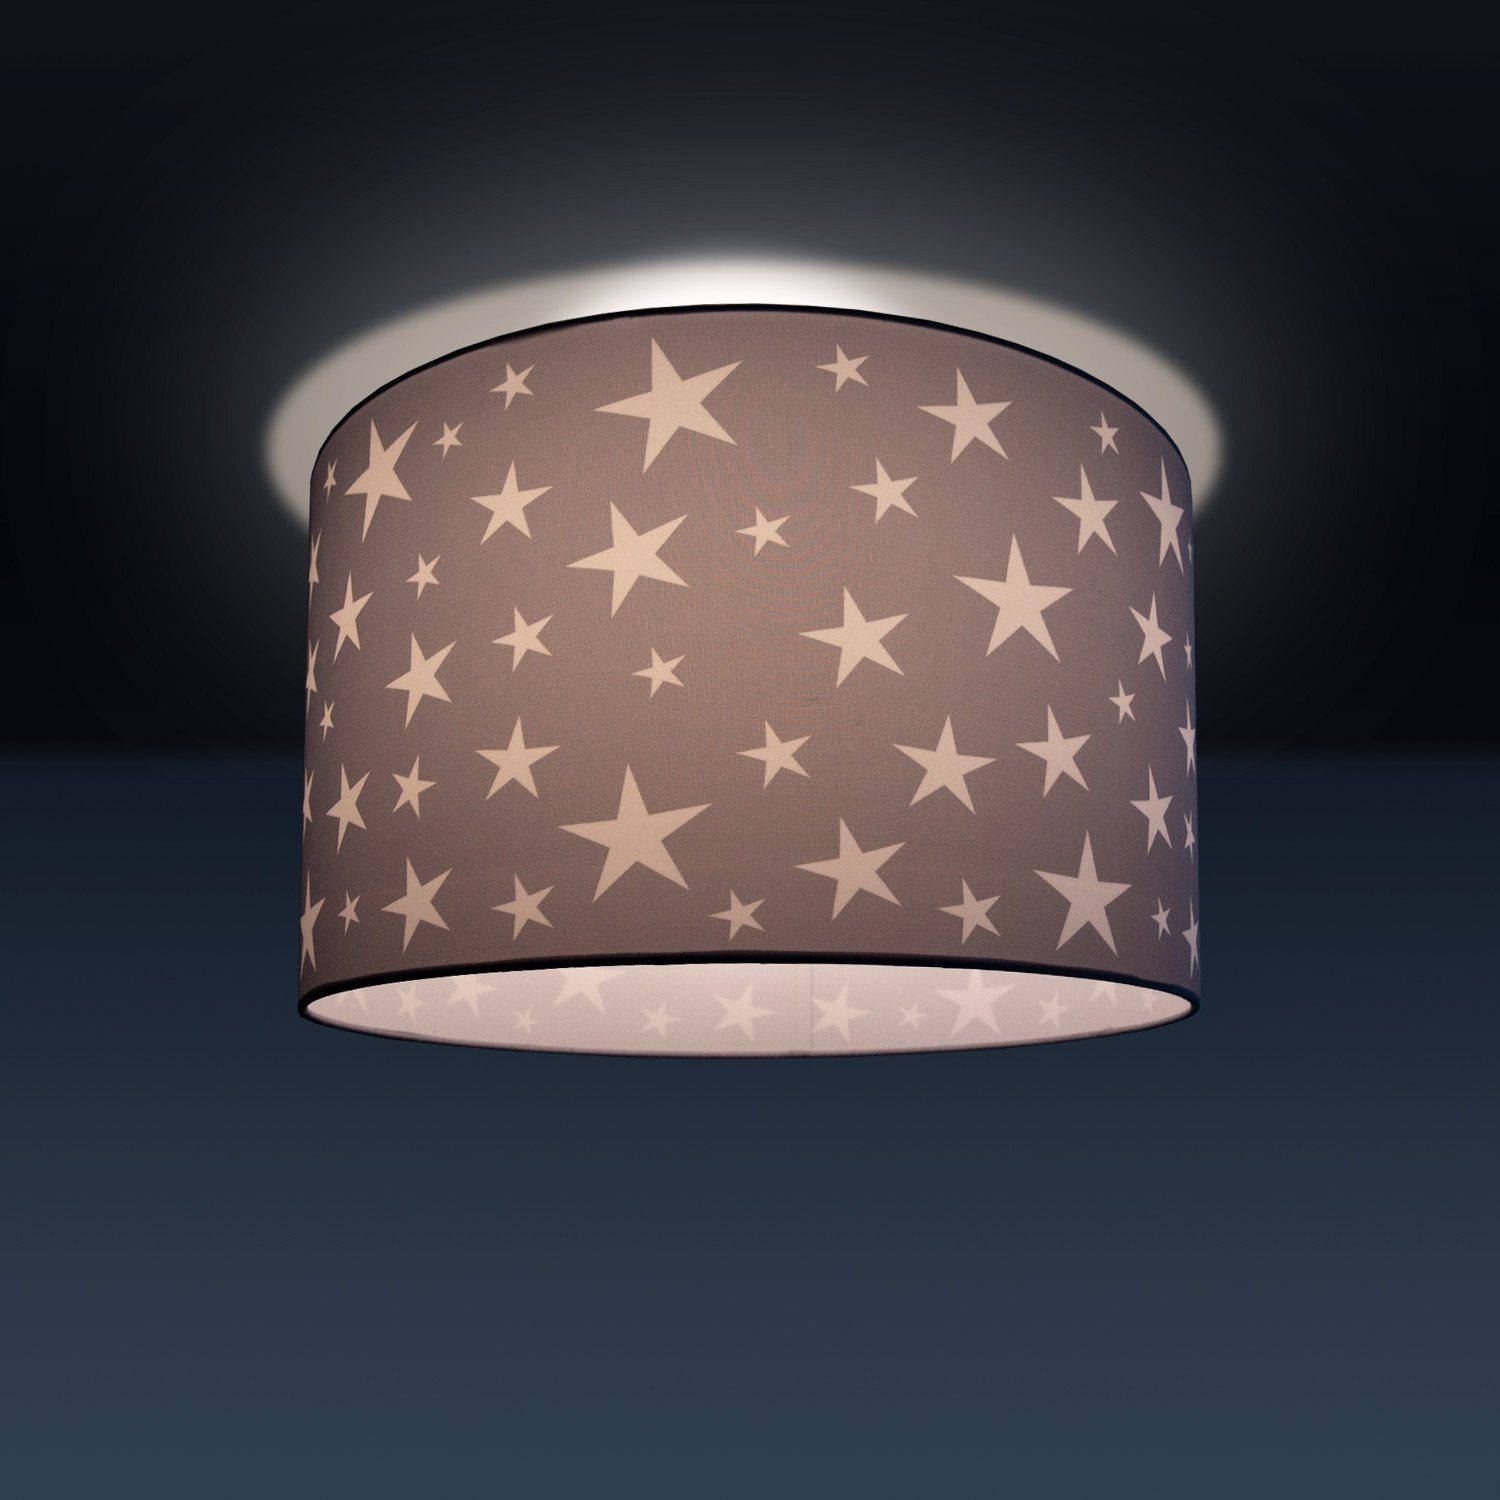 ohne Paco LED Deckenlampe Leuchtmittel, Capri Motiv Deckenleuchte Kinderlampe Sternenhimmel E27 Kinderzimmer Home 315,